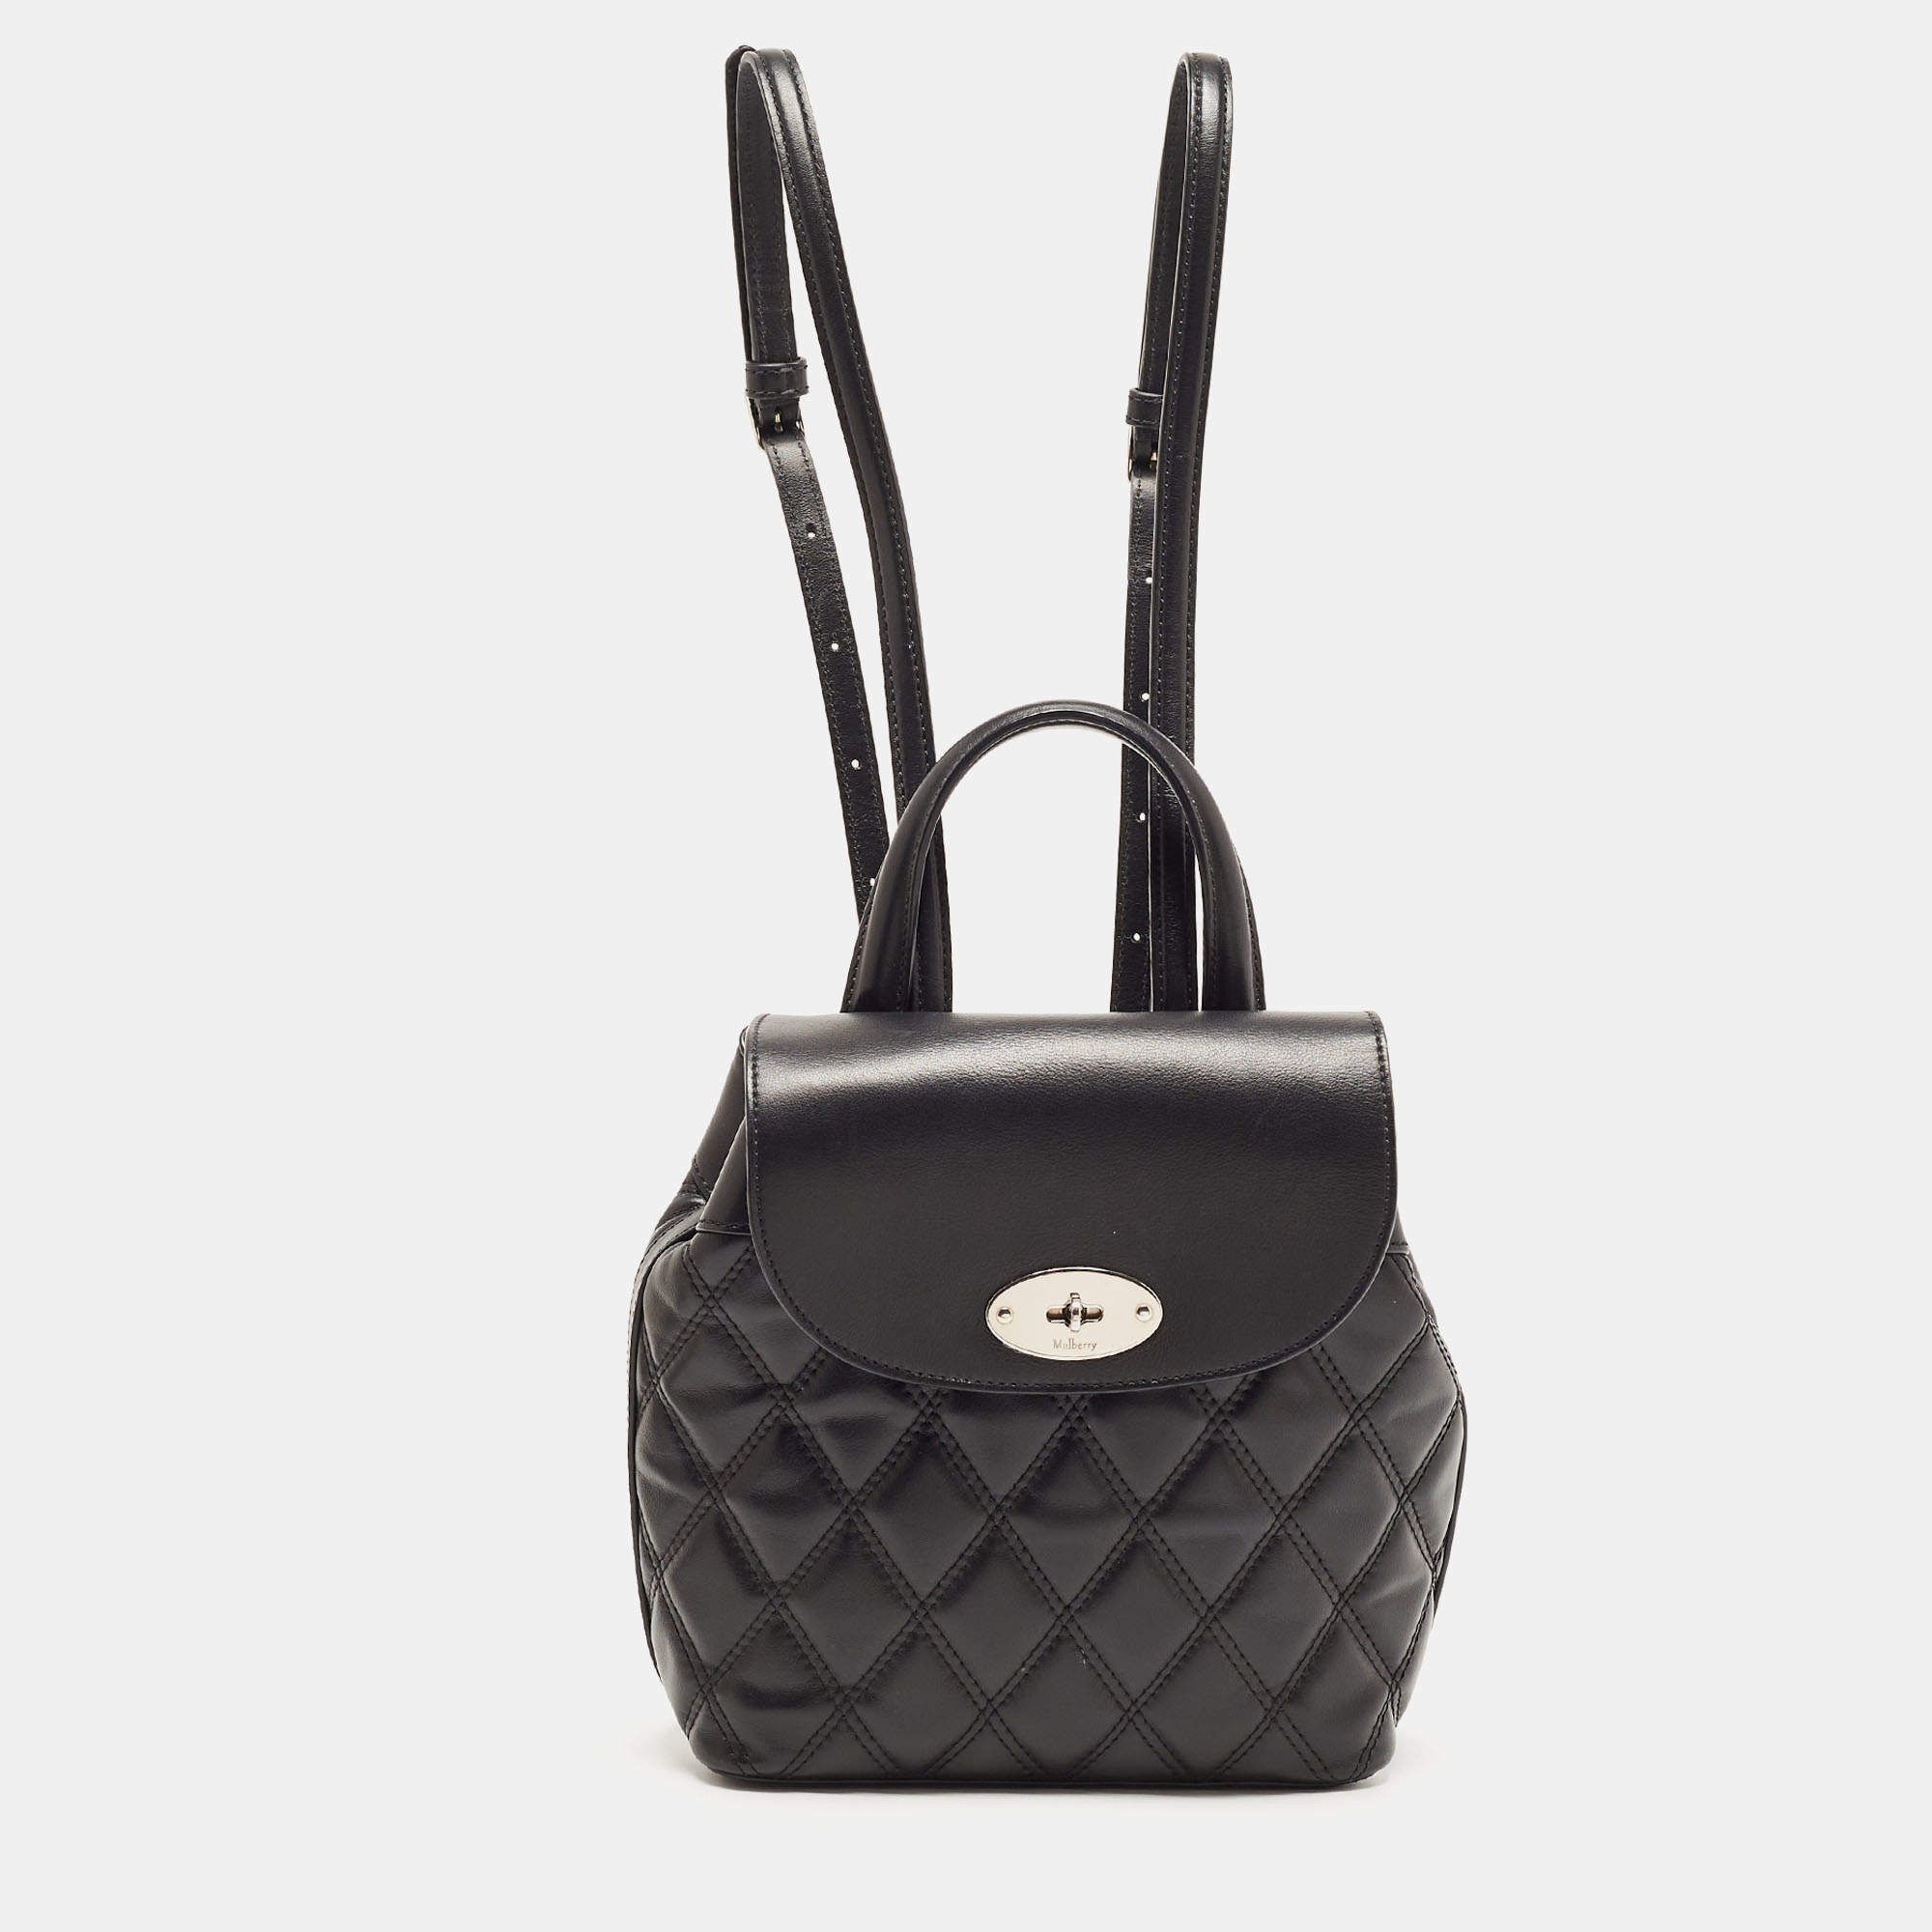 Mulberry,Prada Daily Use Leather Branded Handbags, Gender: Women